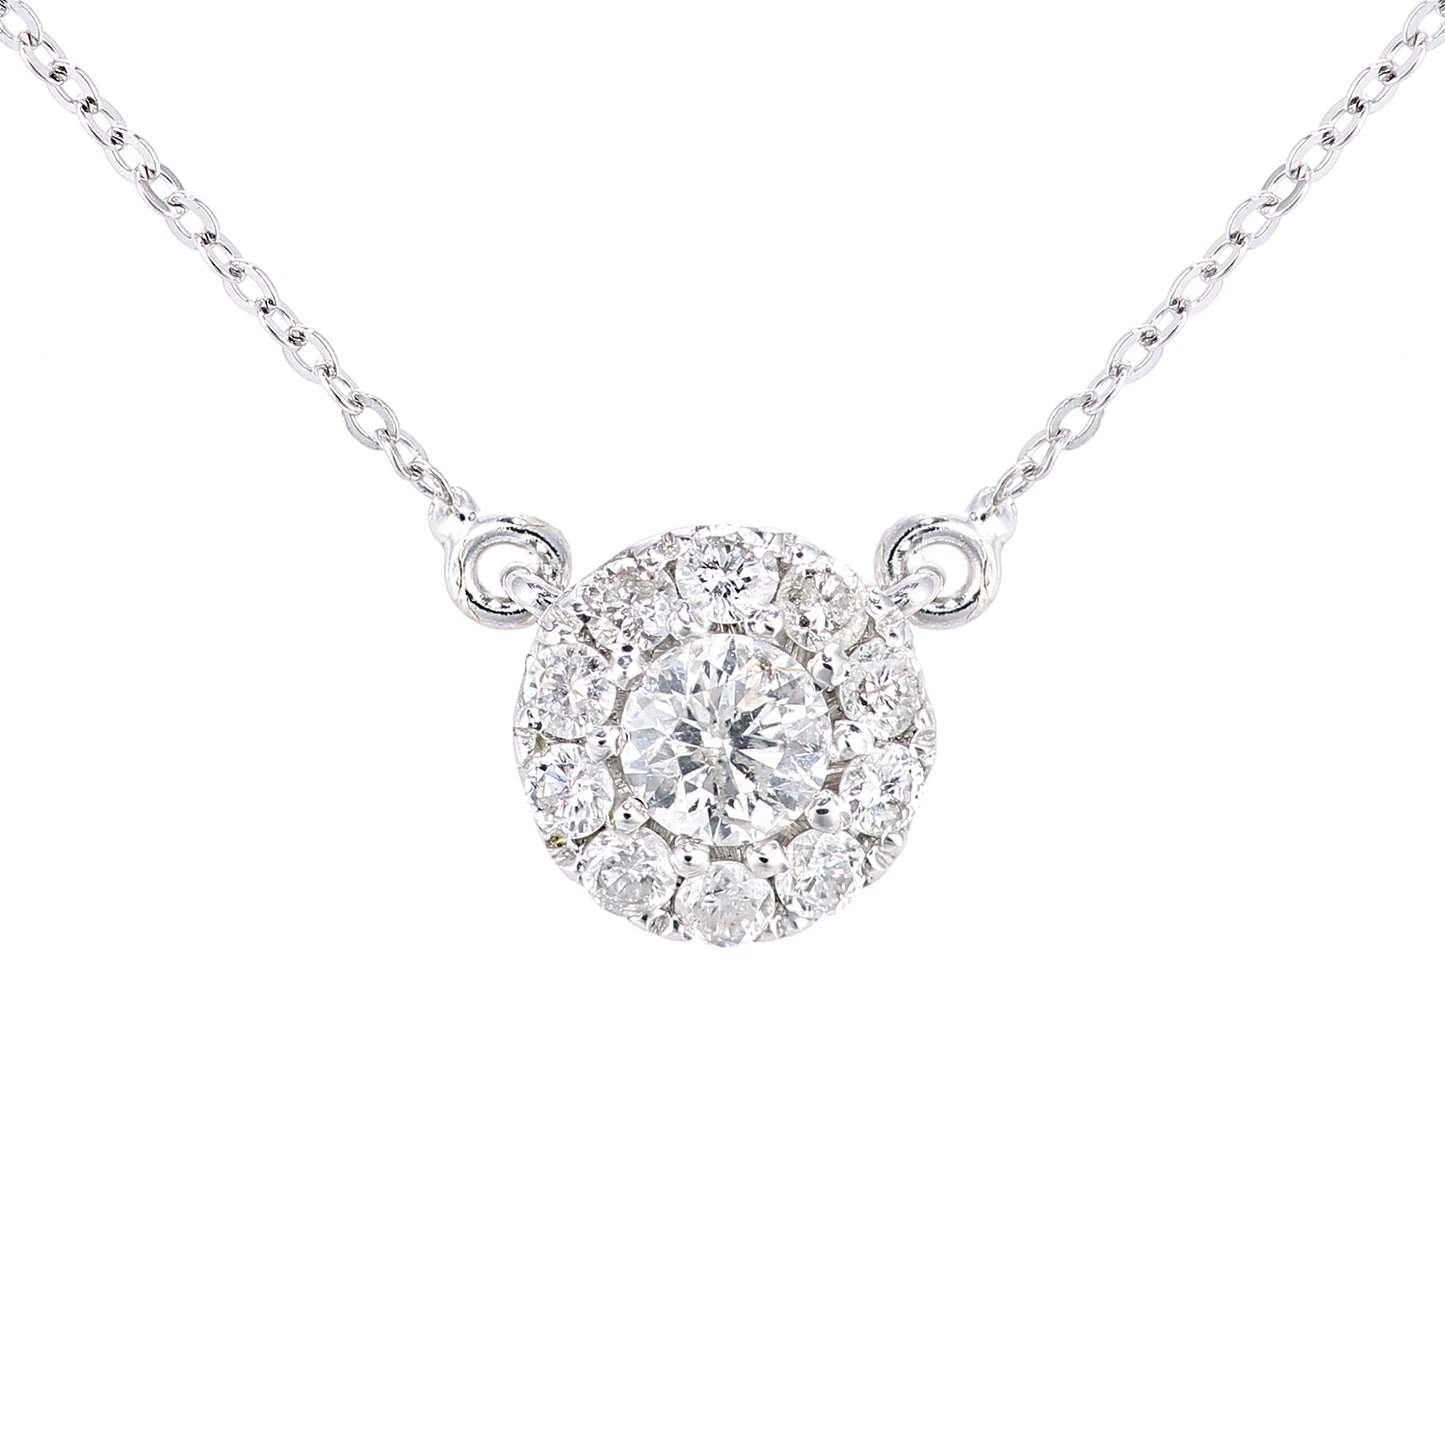 9ct White Gold  Round 0.28ct Diamond Halo Charm Necklace 18 inch - PNEAXL30003W